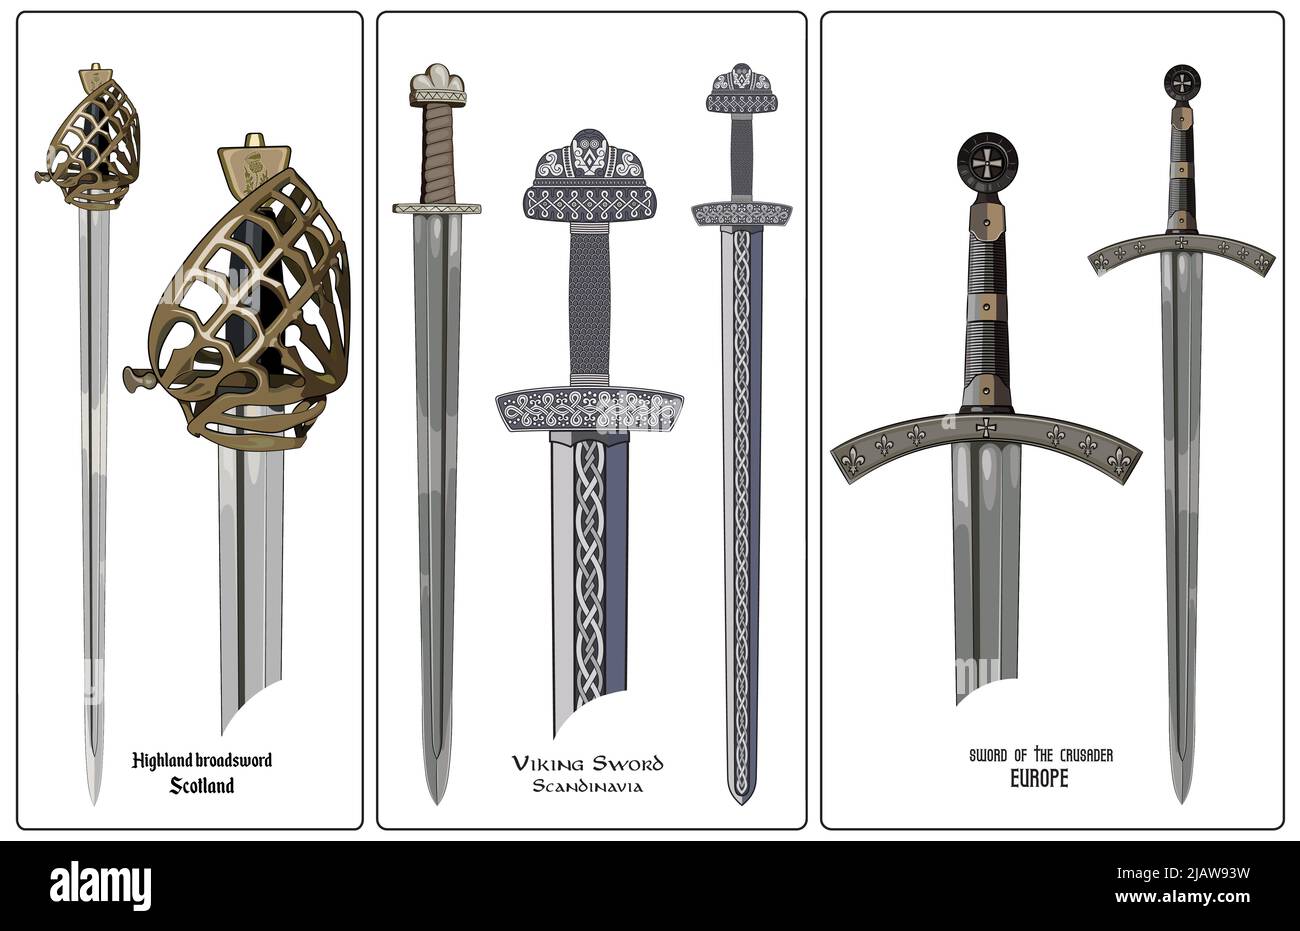 Ancient Europe weapon - set of swords. Viking's sword, sword knights crusaders, broadsword of the highlanders of Scotland. Stock Vector